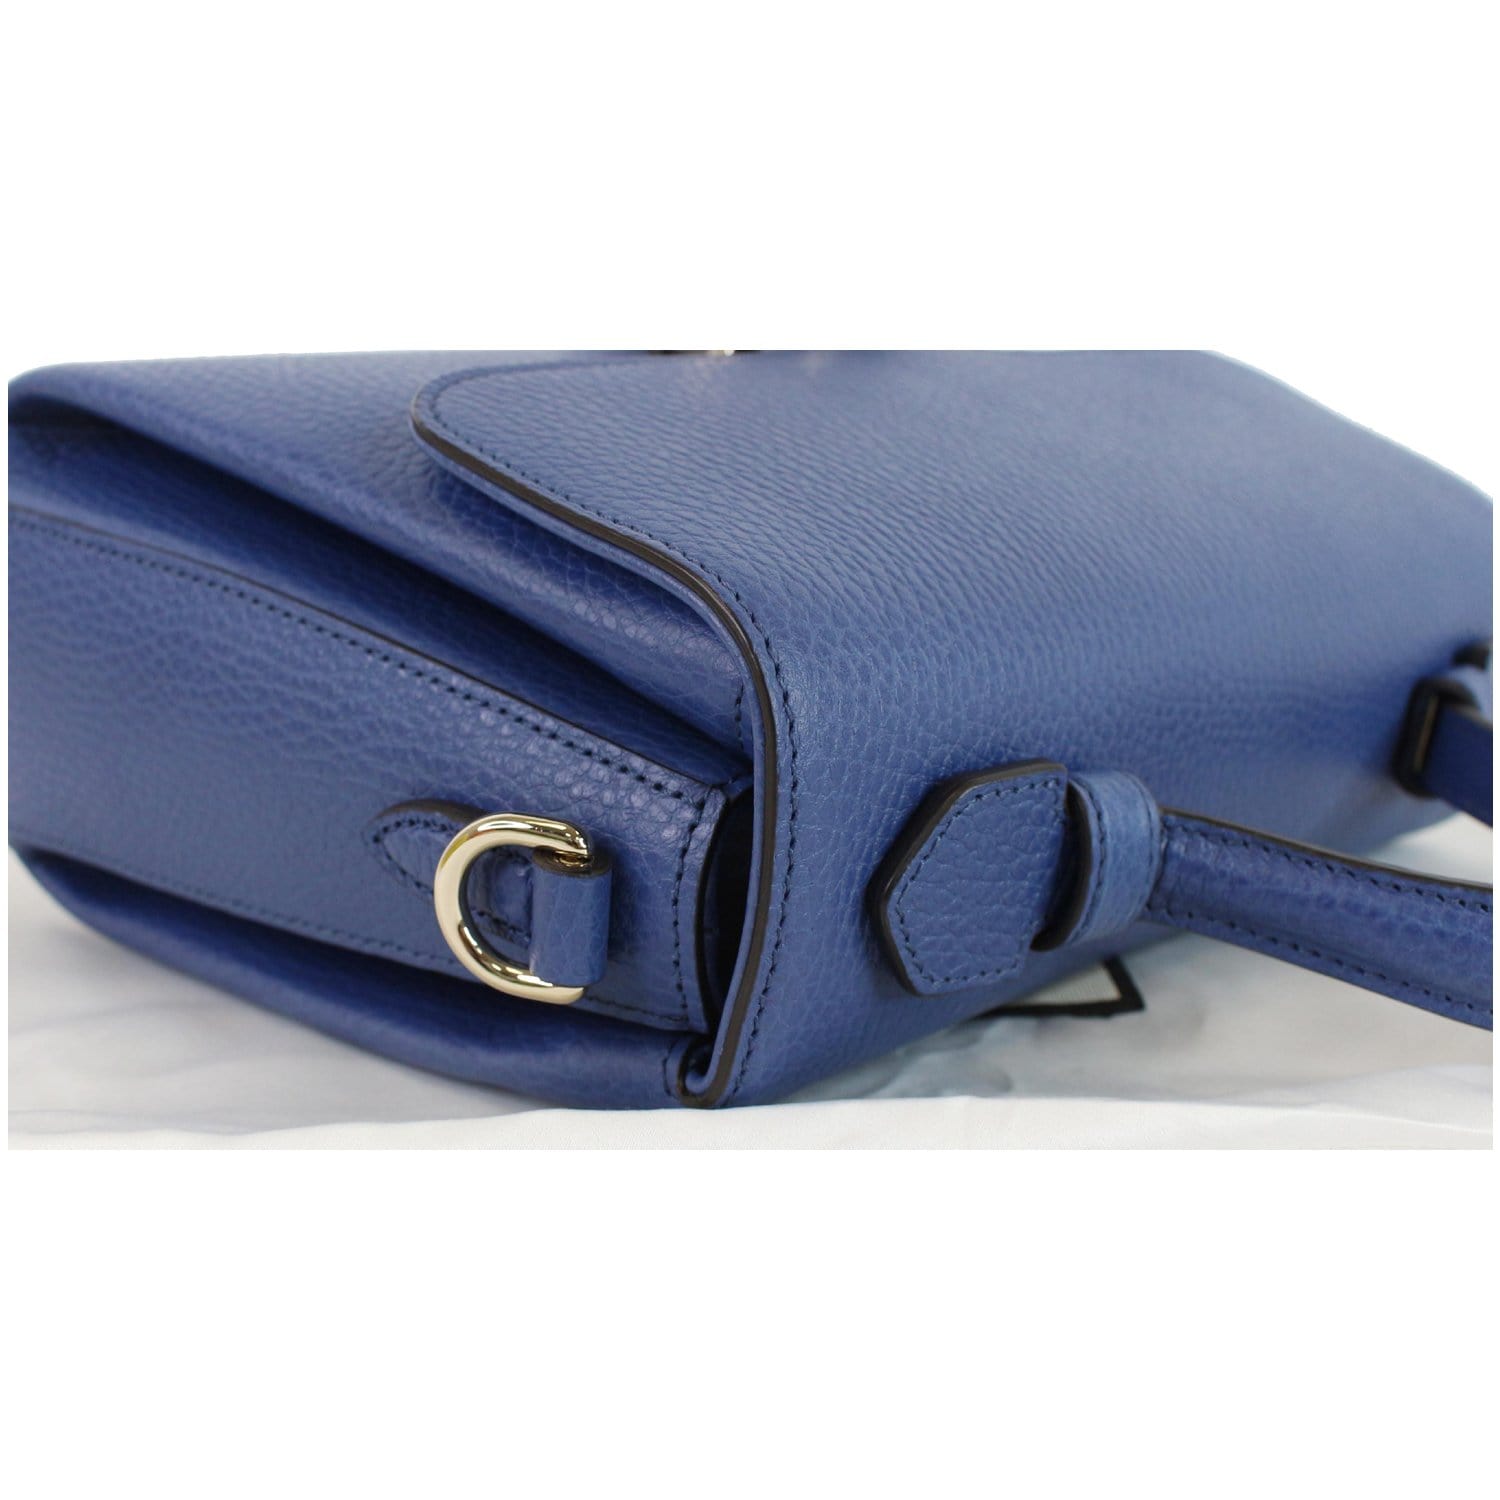 Gucci Interlocking Shoulder Bag (Outlet) Leather Small Blue